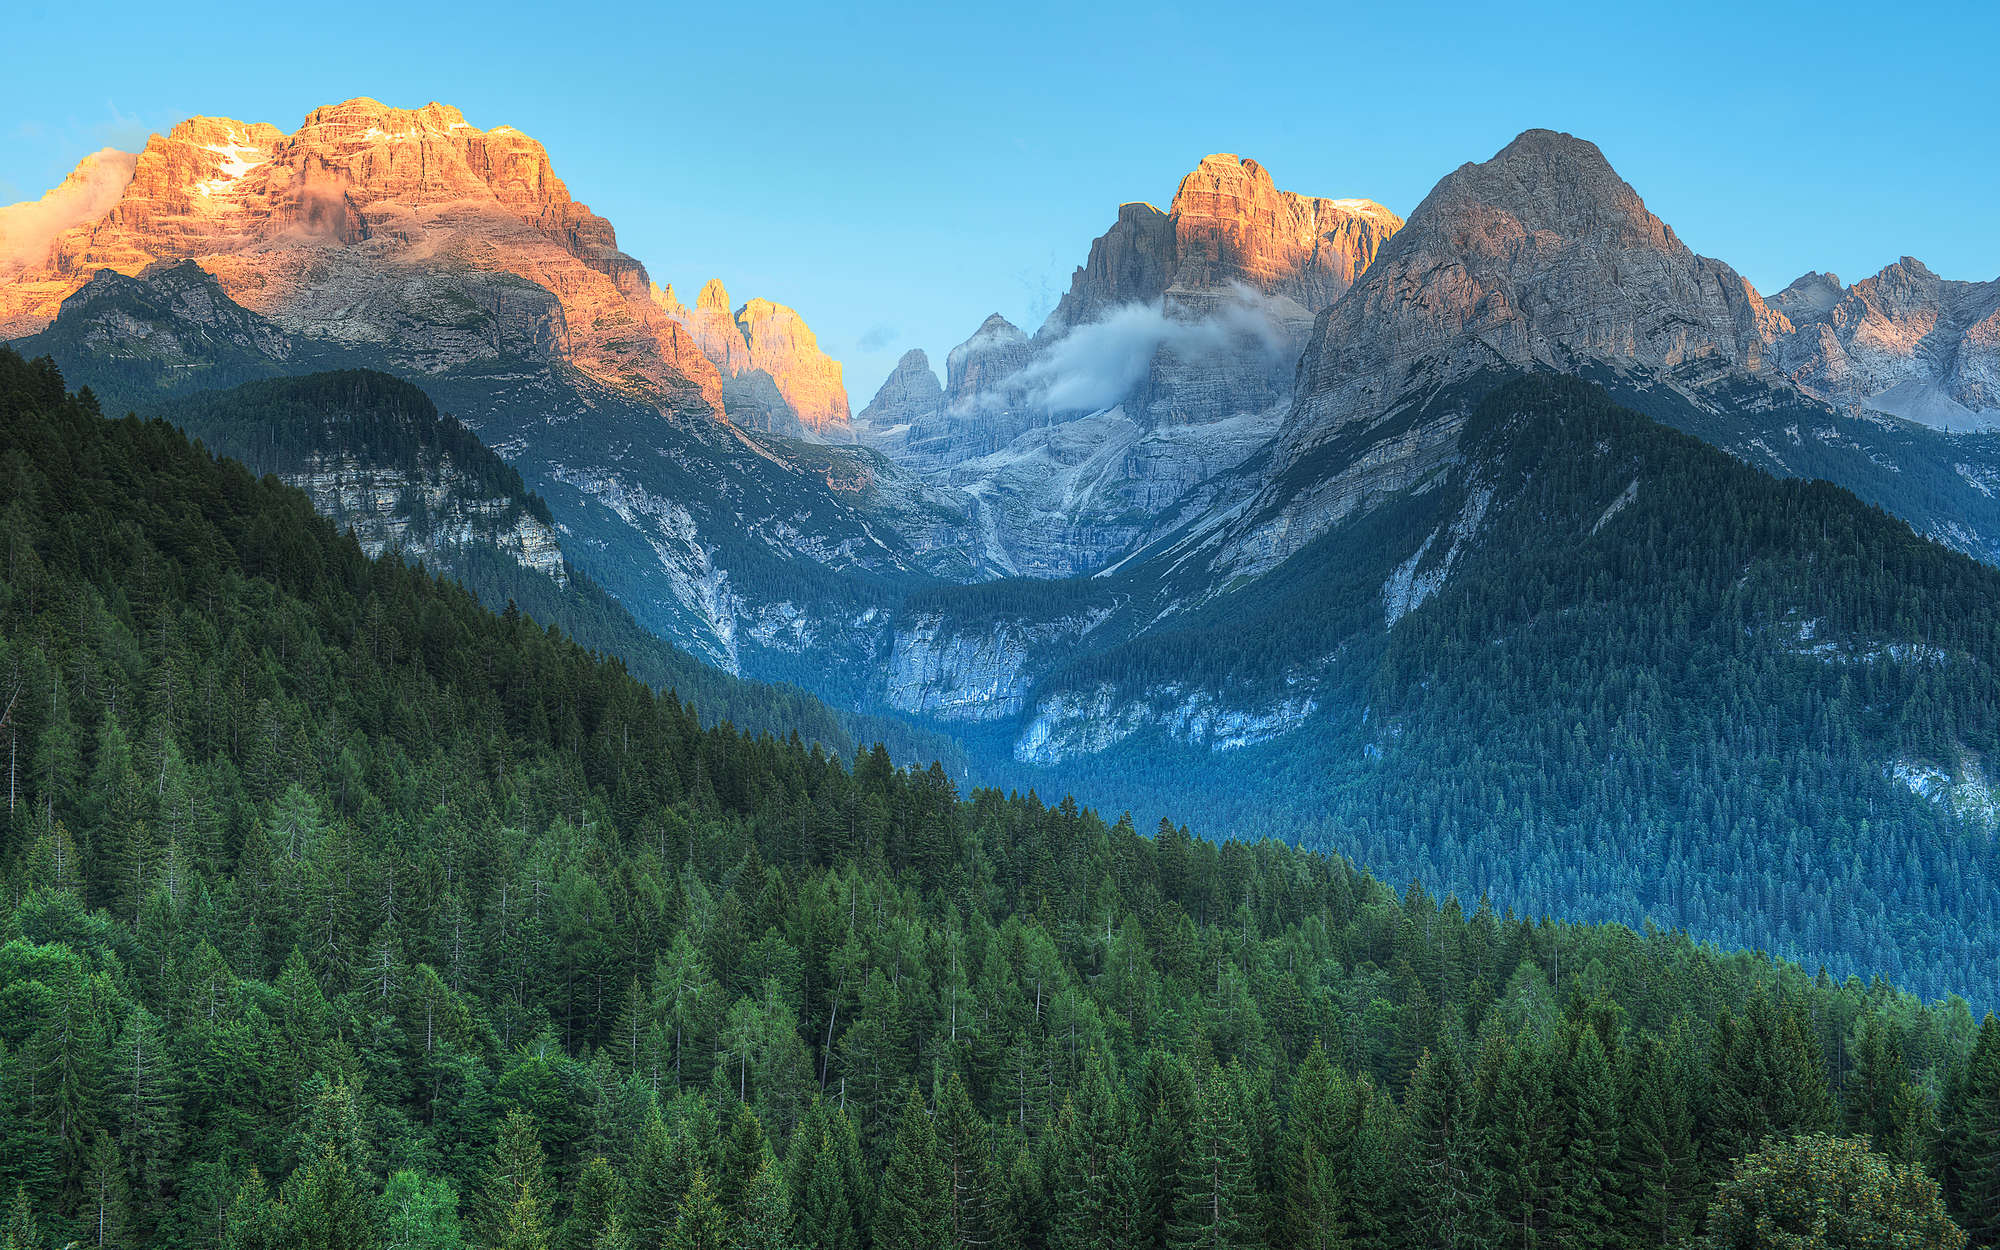             Fototapete Dolomiten Gebirge in Italien – Premium Glattvlies
        